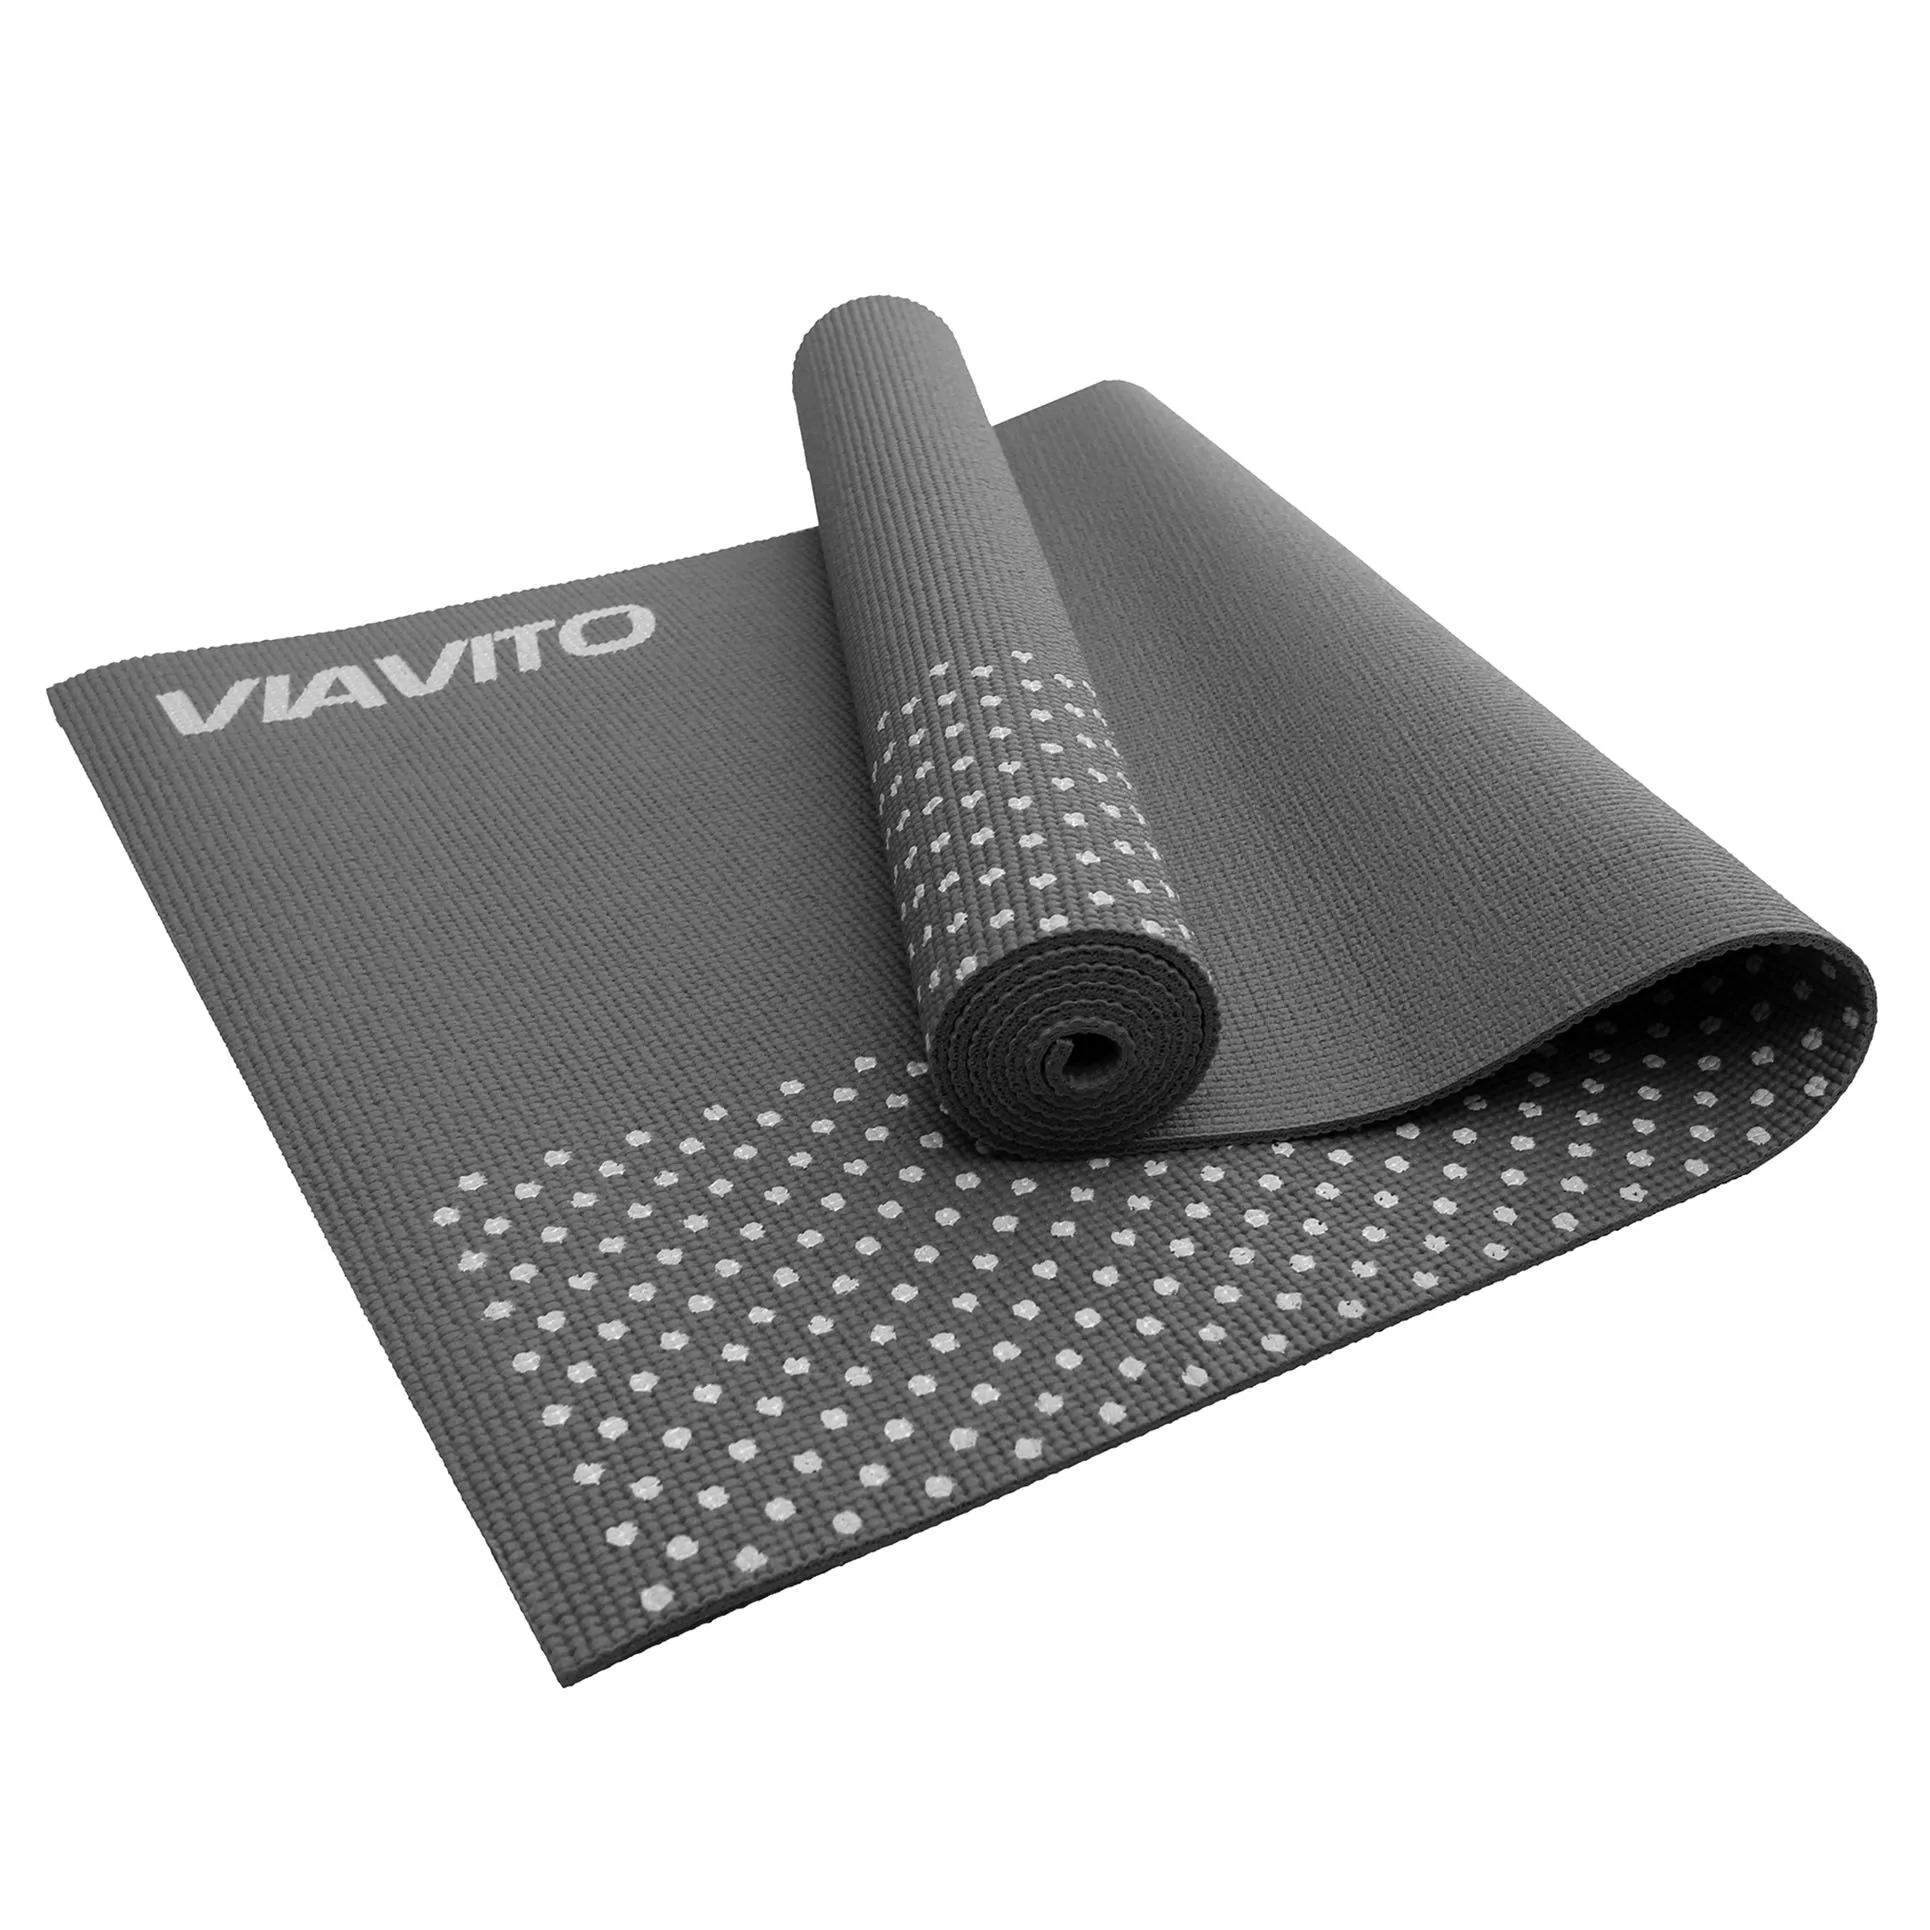 Viavito Leviato 6mm Yoga Mat with Carry Strap